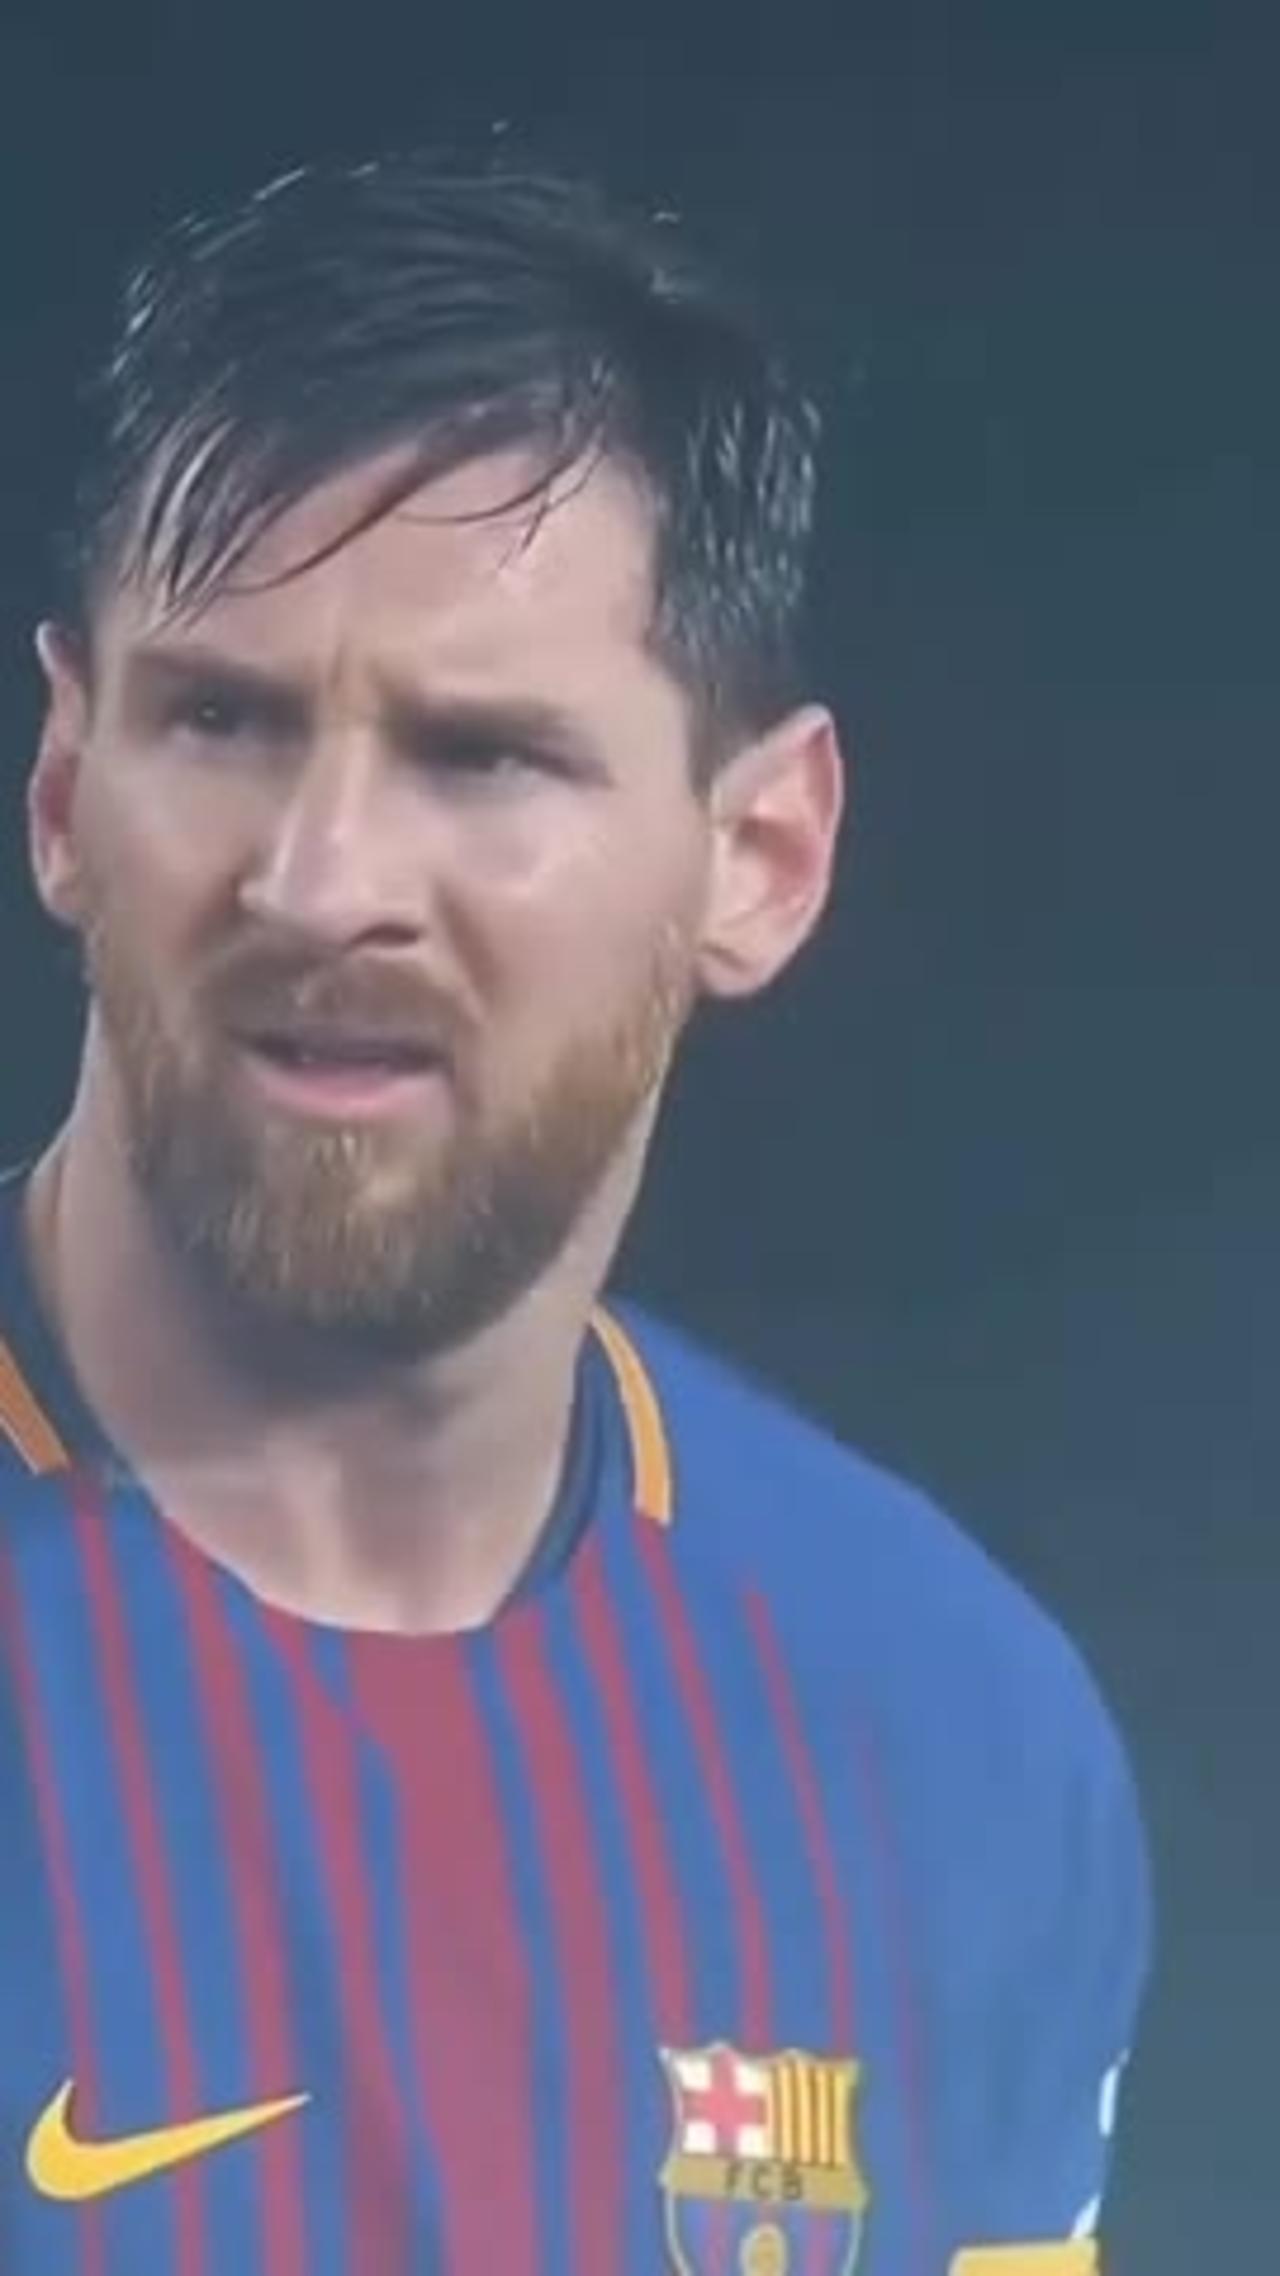 The messi magic shot always so like this#Messi #football#ronaldo#news#sports